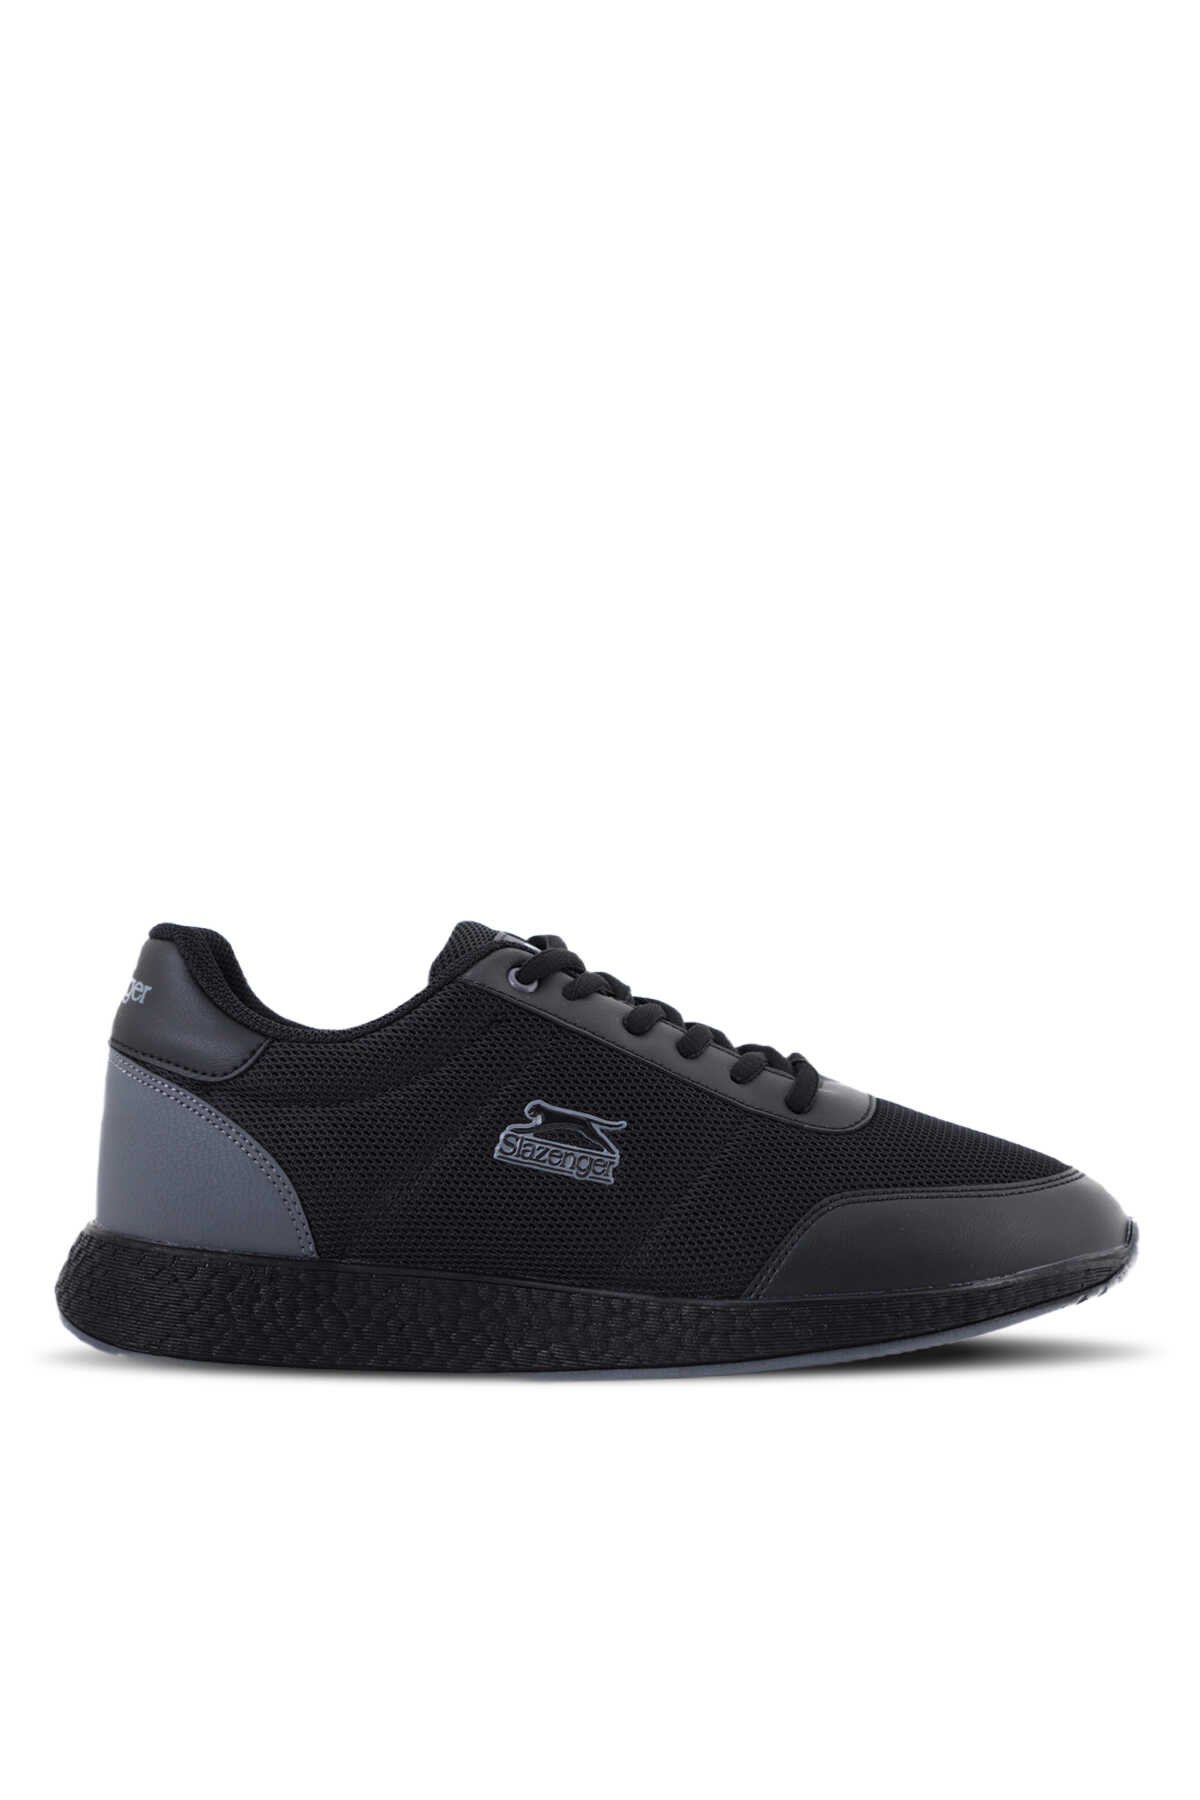 Slazenger - Slazenger ONYEKA I Sneaker Erkek Ayakkabı Siyah / Siyah